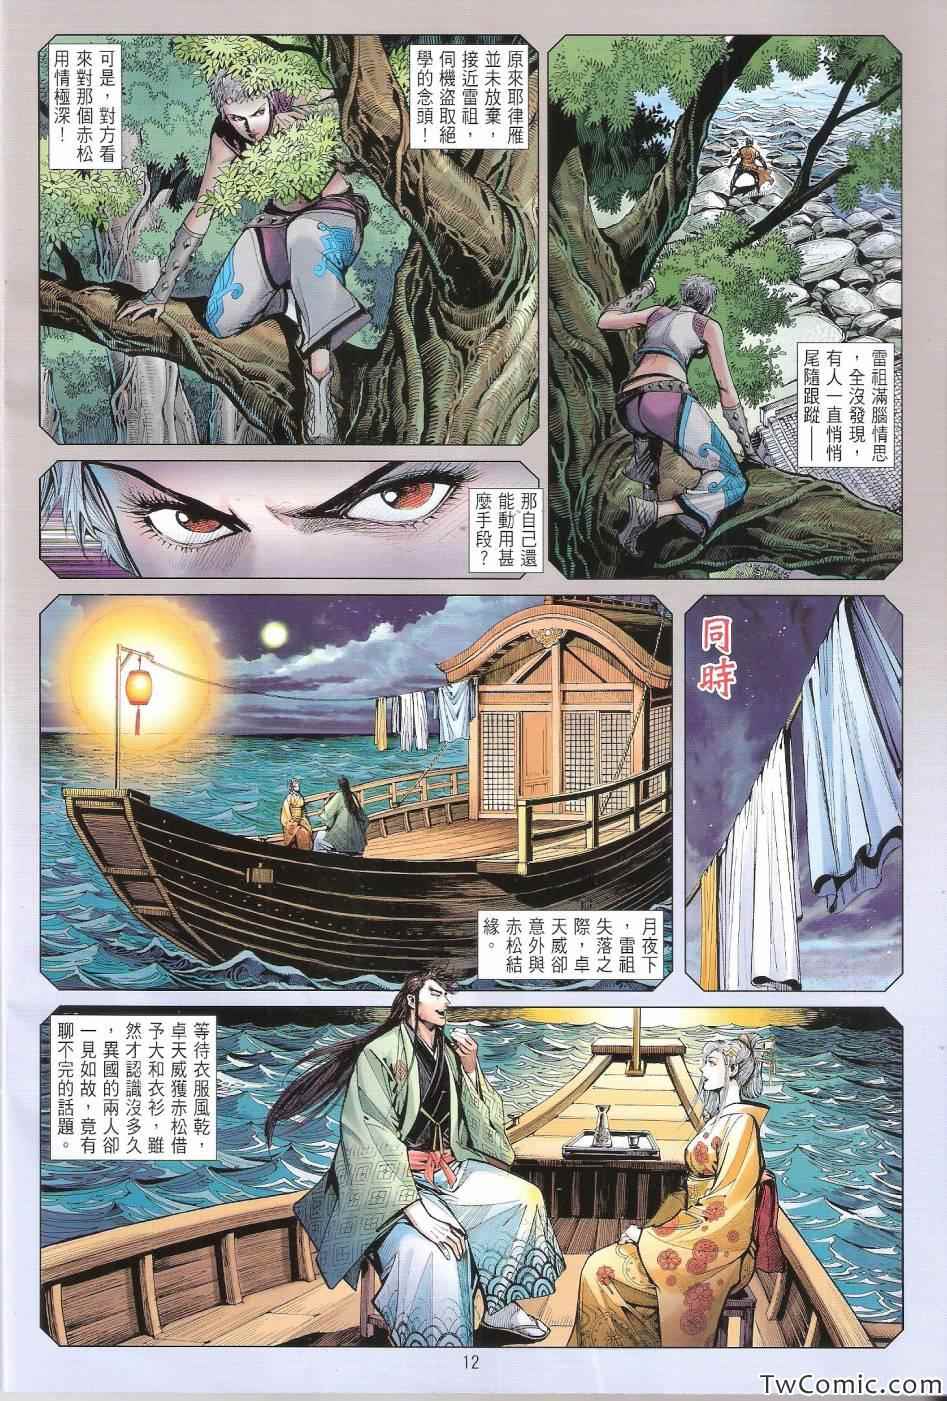 《铁将纵横2012》漫画 铁将纵横 81卷